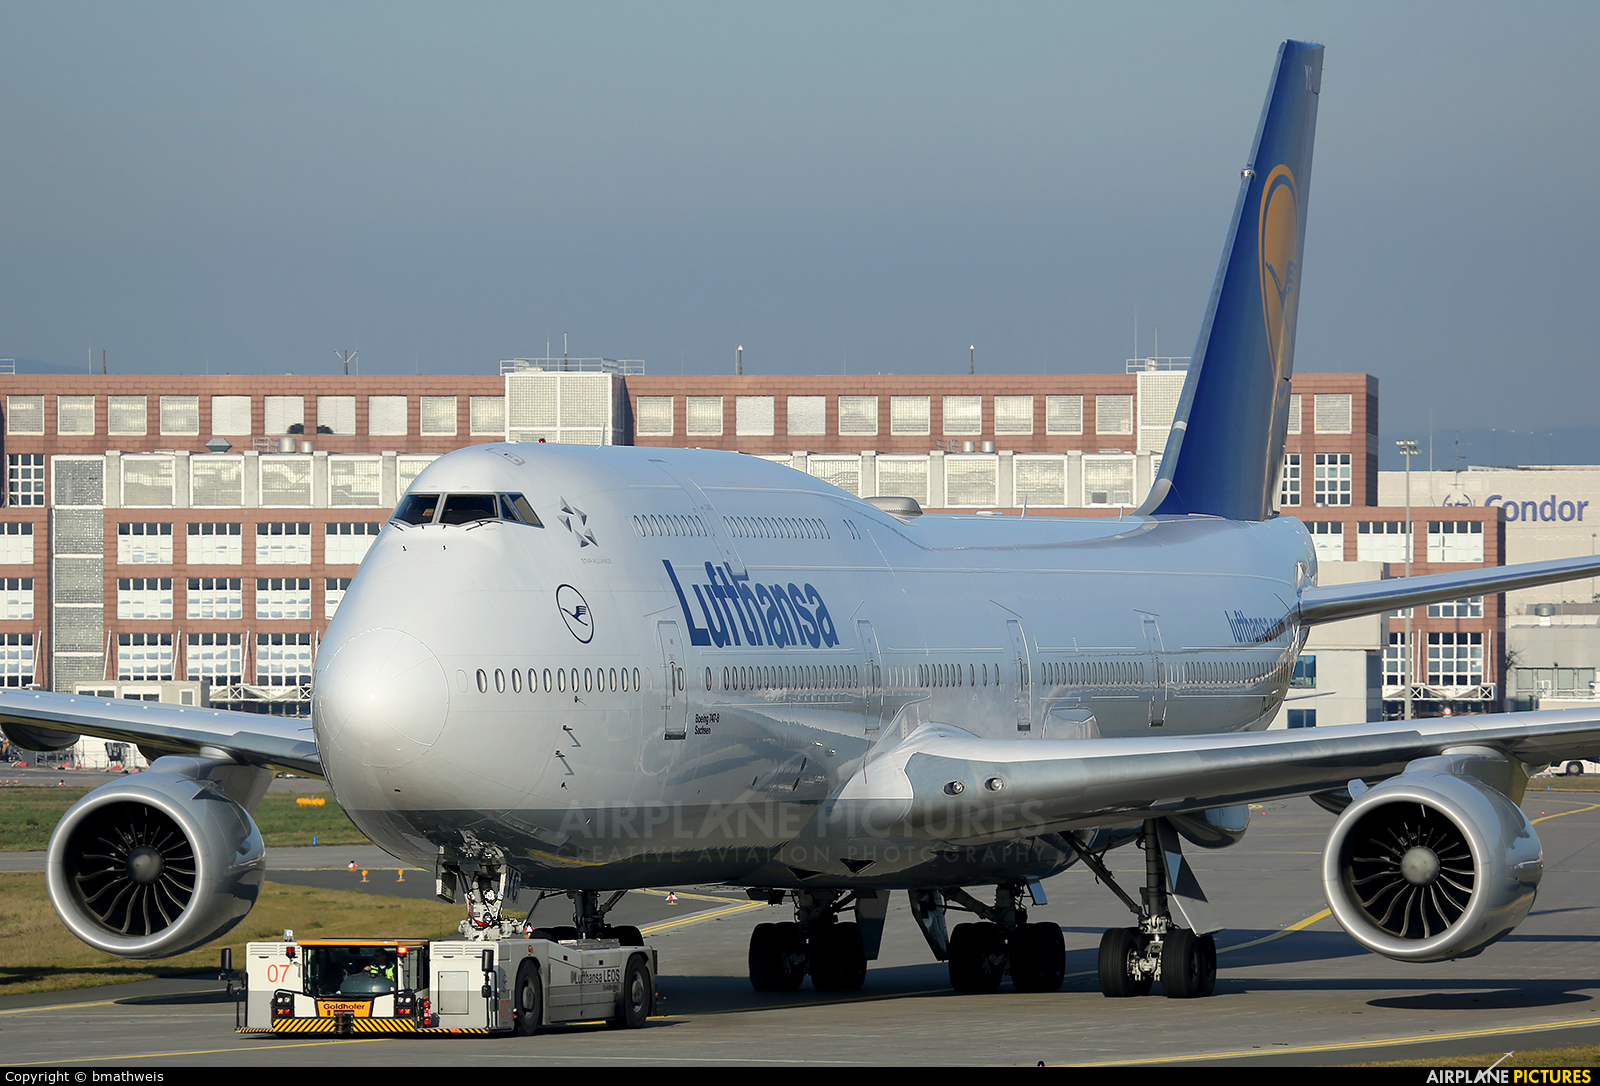 Lufthansa D-ABYC aircraft at Frankfurt